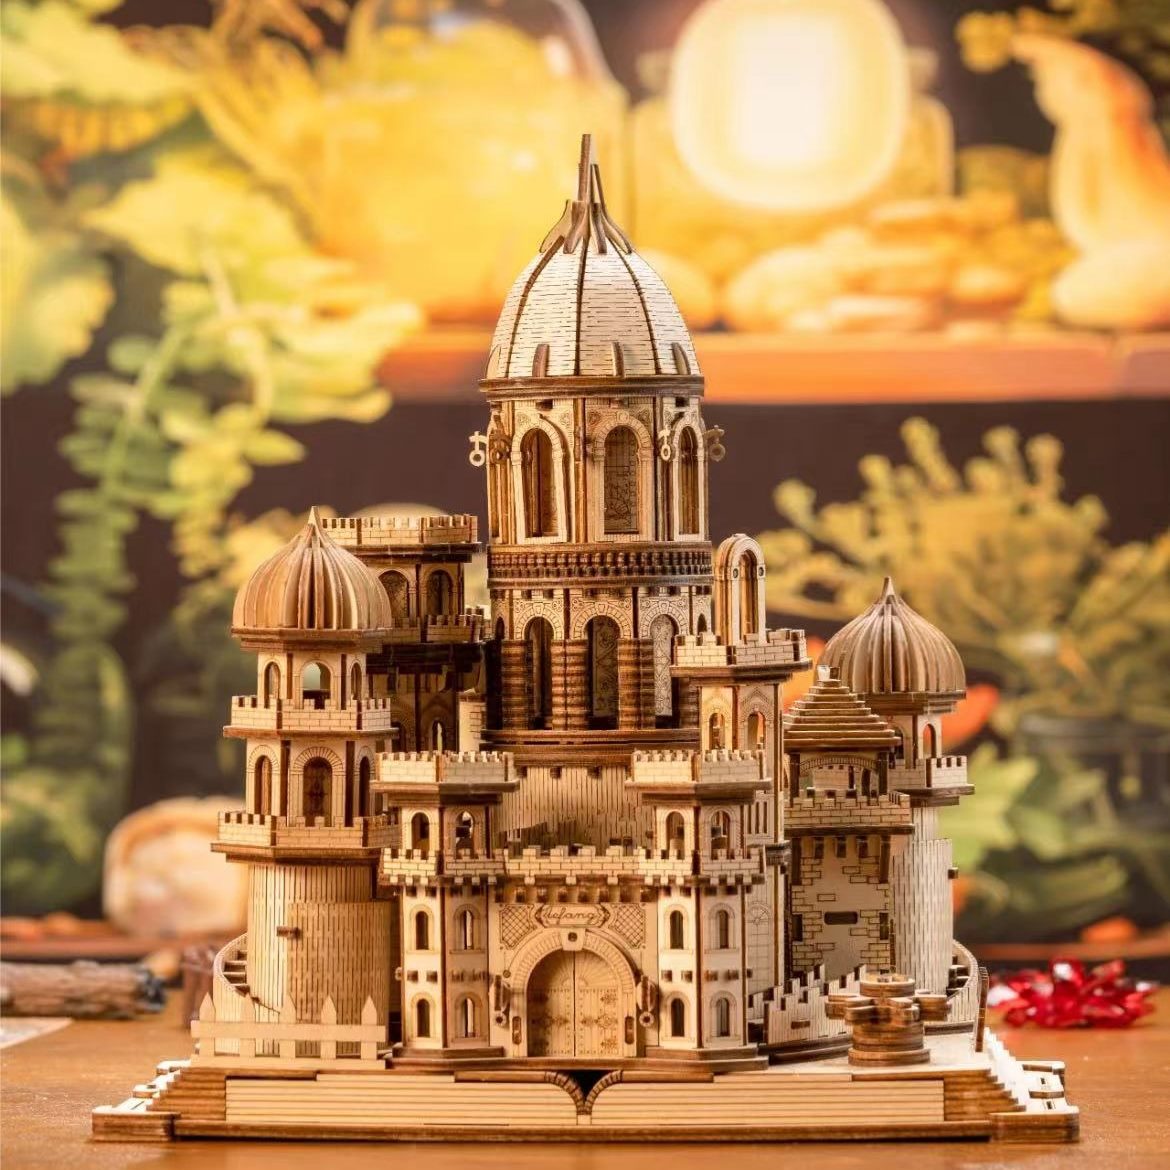 Magic Castle 3D Wooden Puzzle | Moving Gears | Mechanical Models | Miniature - front